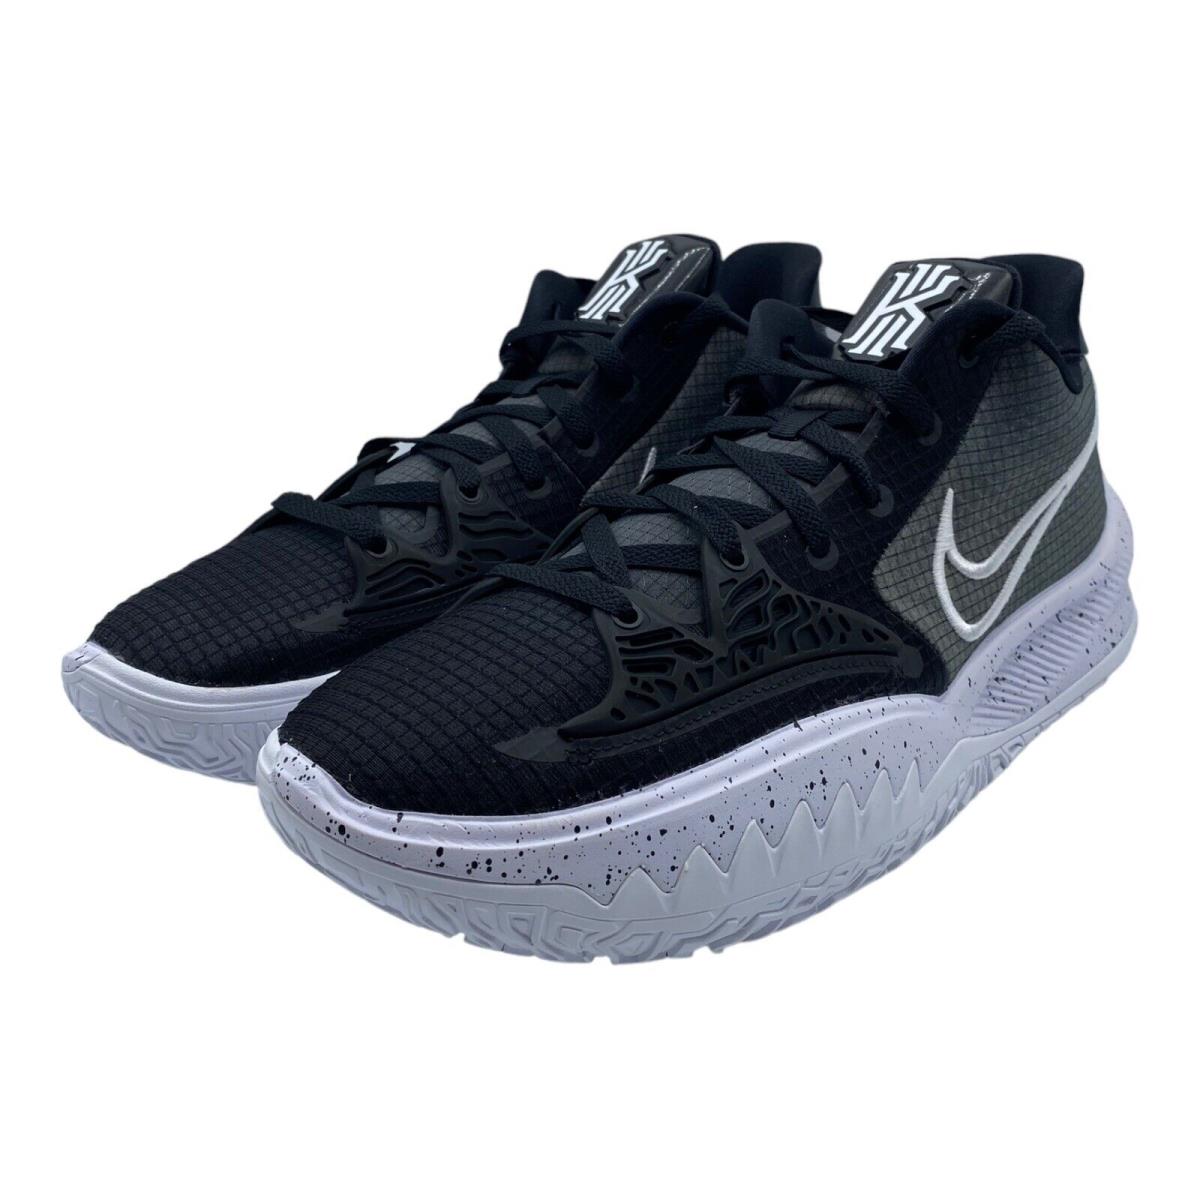 Nike Kyrie Low 4 TB Promo Black White DM5041-001 Basketball - Men s Size 13 - Black